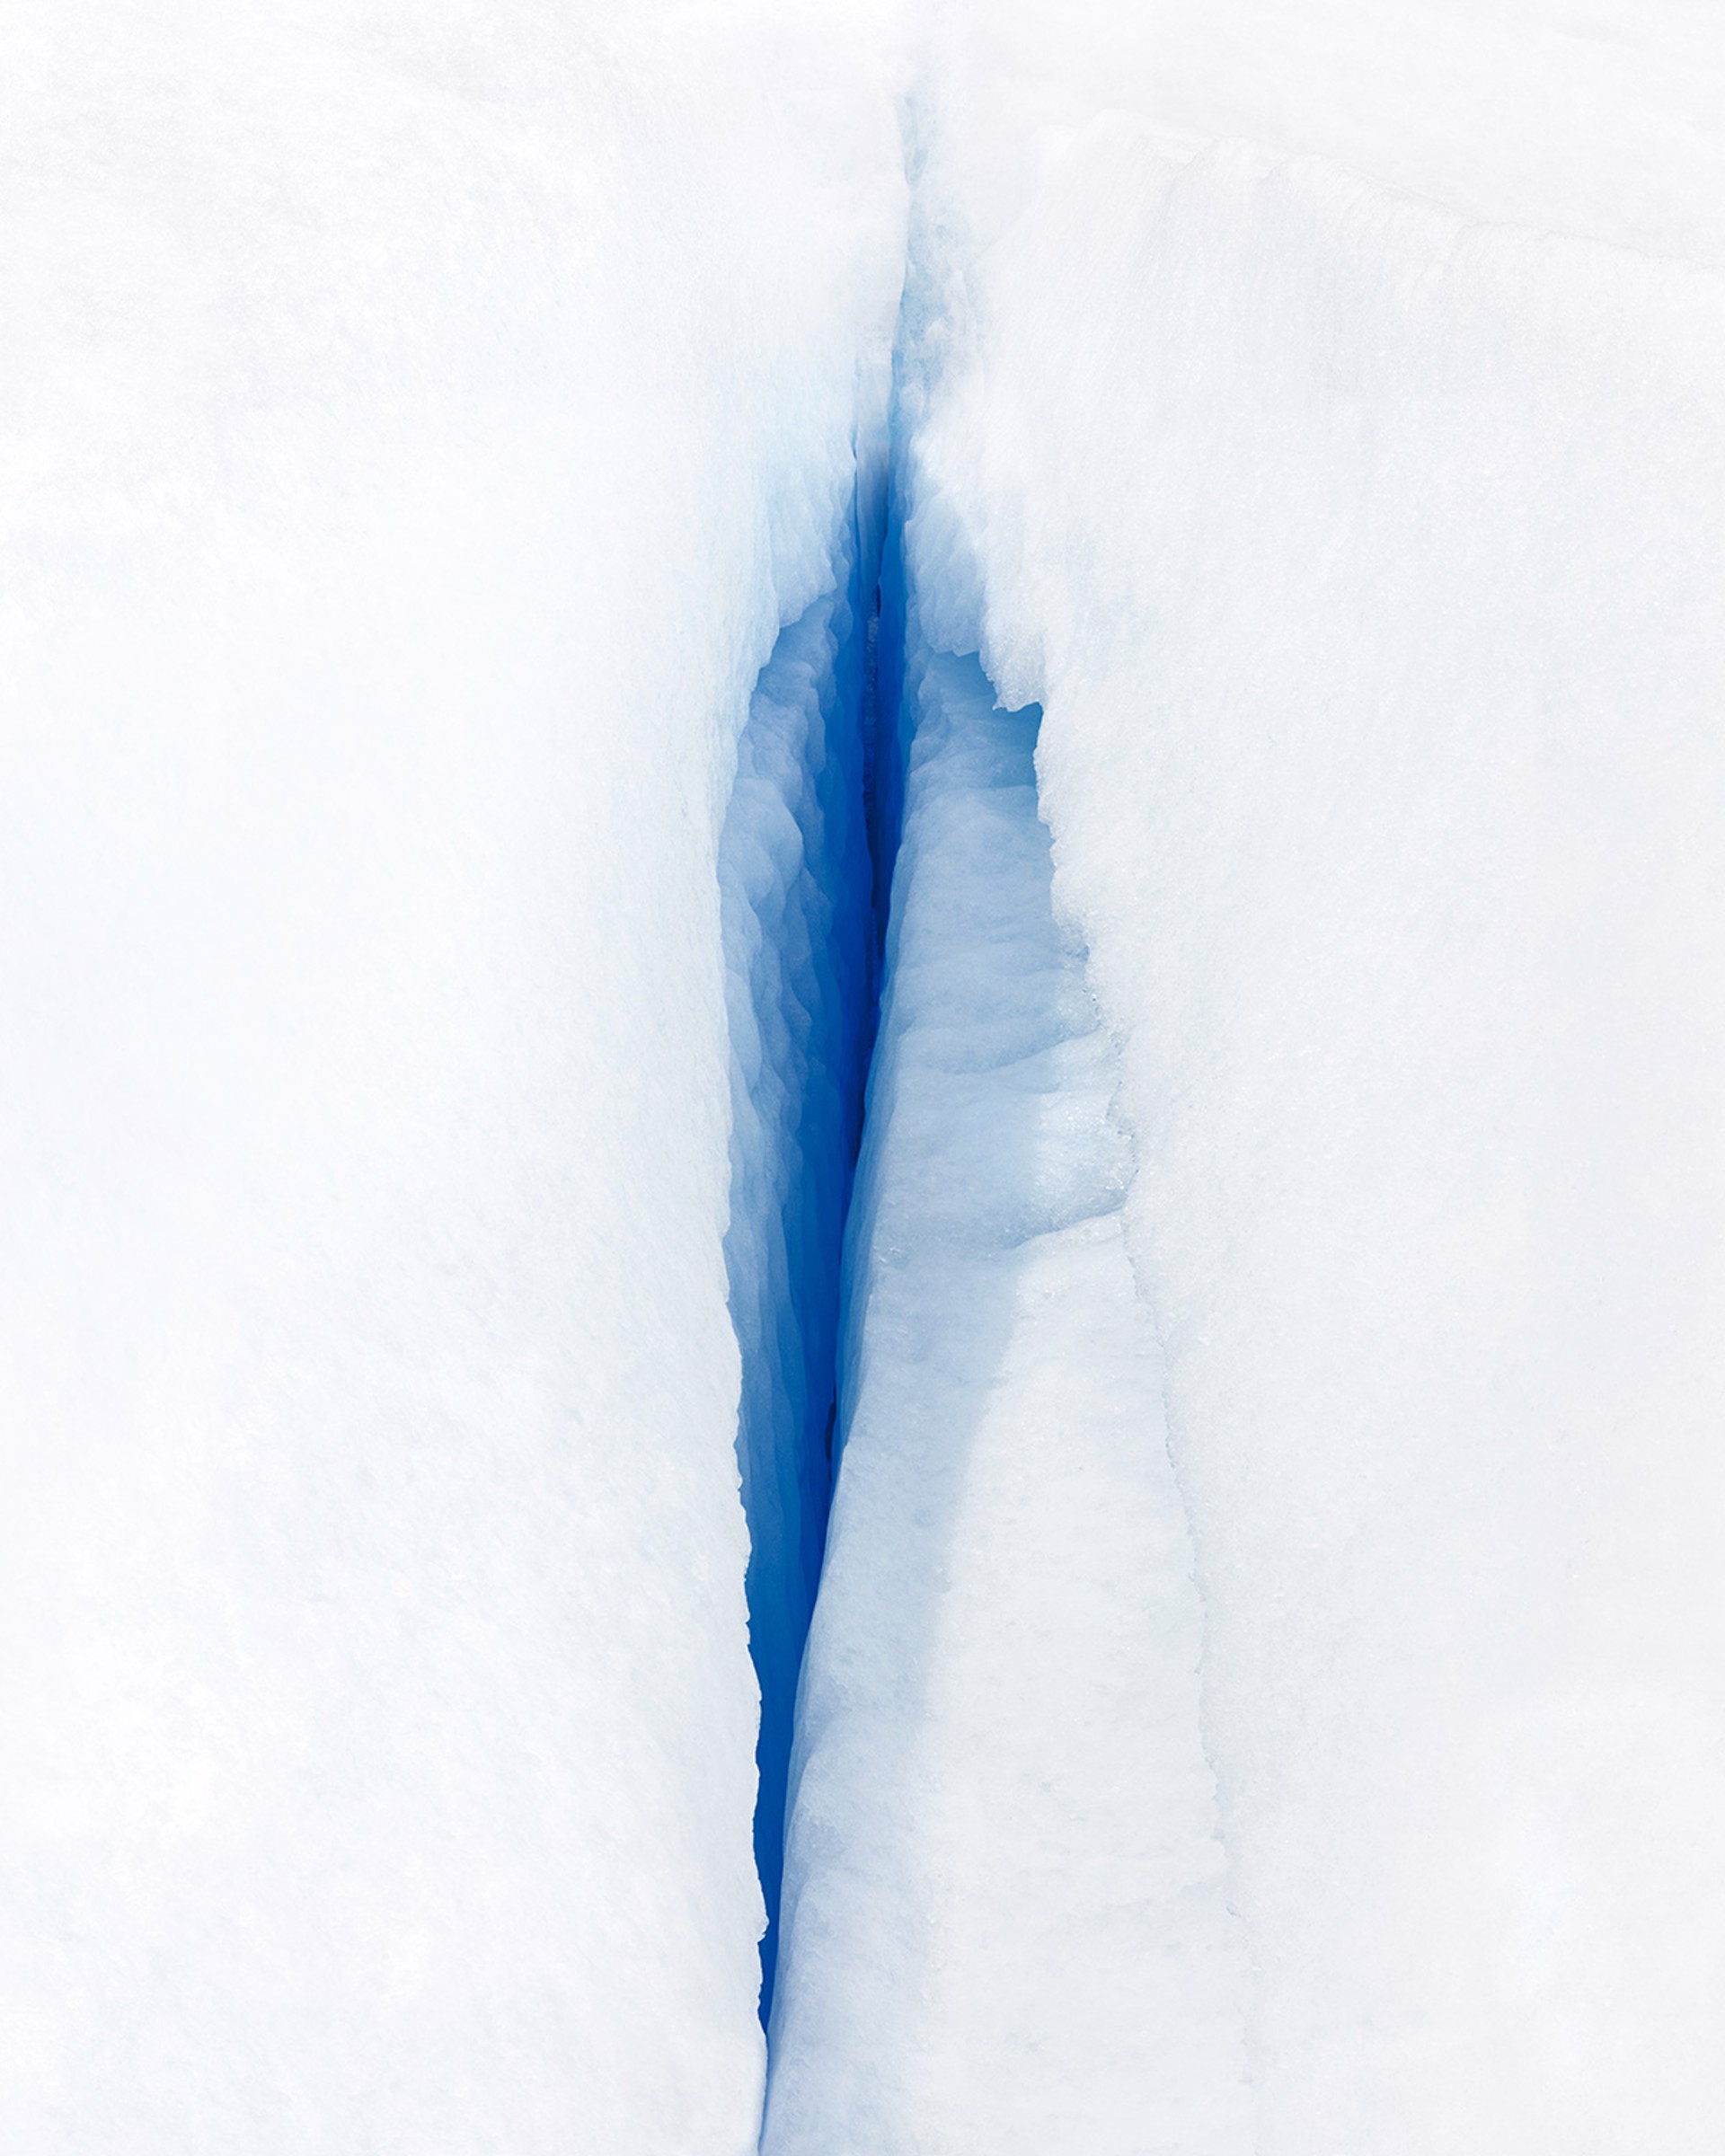 Glacier #2 by Jonathan Smith